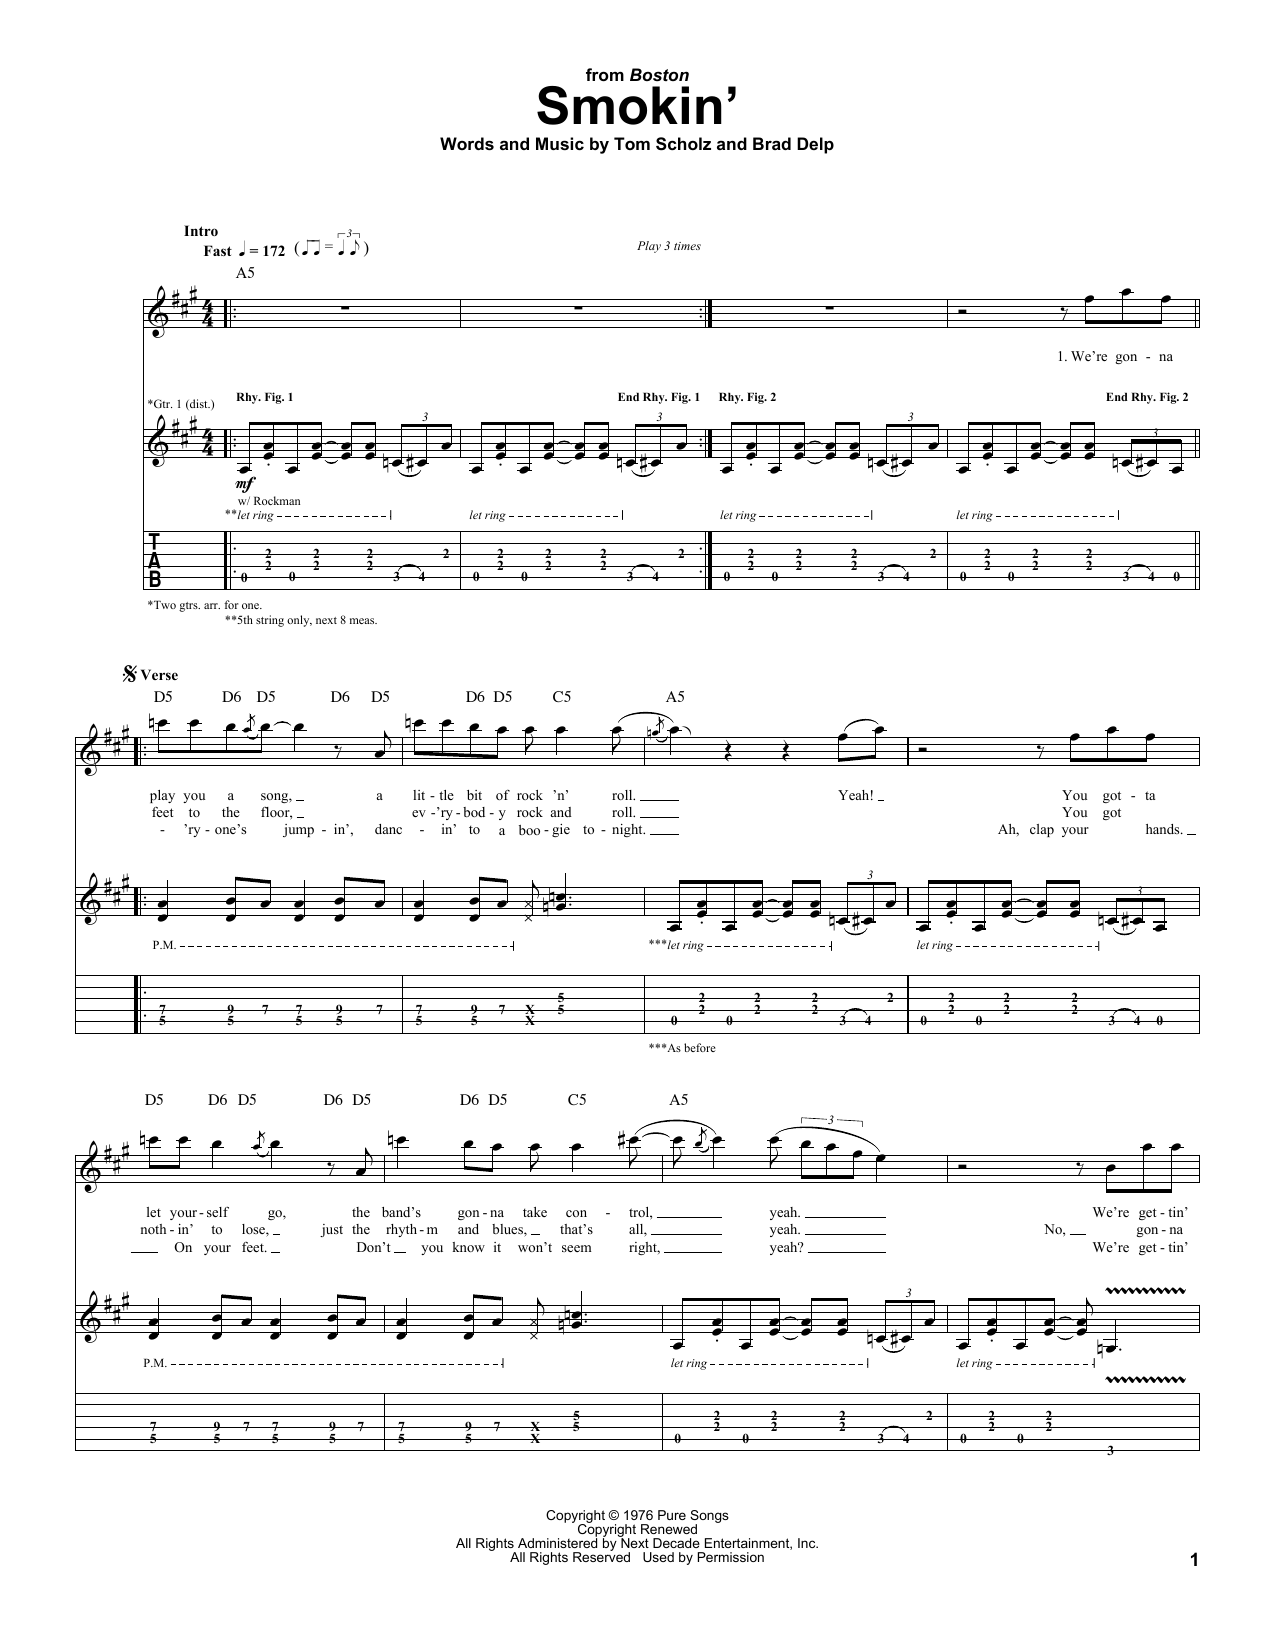 Boston Smokin' Sheet Music Notes & Chords for Guitar Tab Play-Along - Download or Print PDF